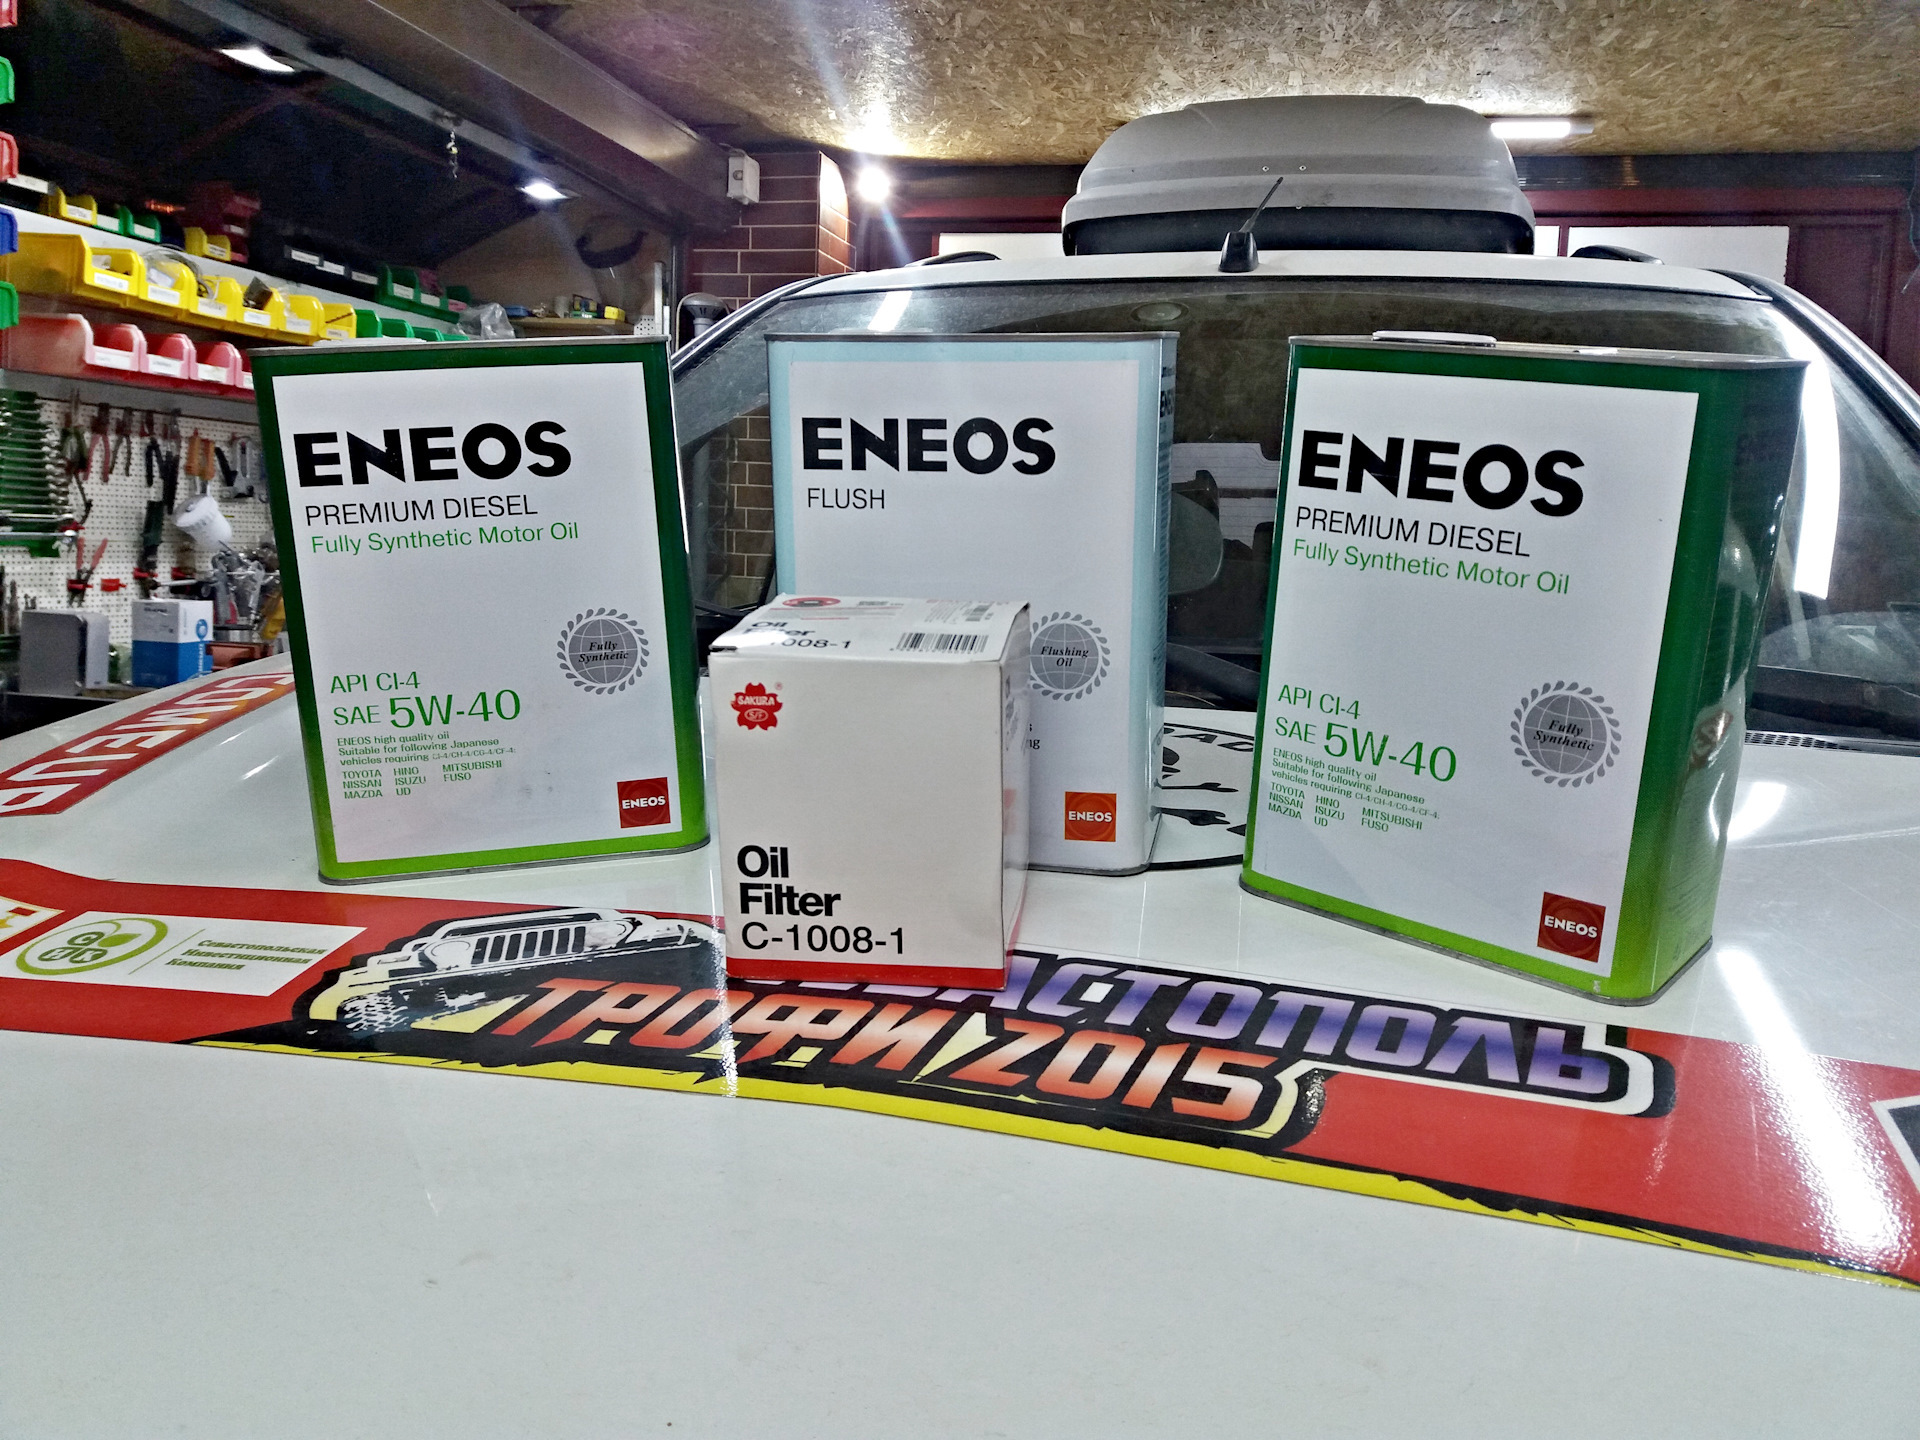 Паджеро спорт 2 дизель 2.5 масла. ENEOS Premium Diesel 5w-40. ENEOS 5w40 Premium Diesel допуски. ENEOS 5w40 Premium Diesel артикул. ENEOS Premium Diesel Митсубиси Паджеро спорт 2.